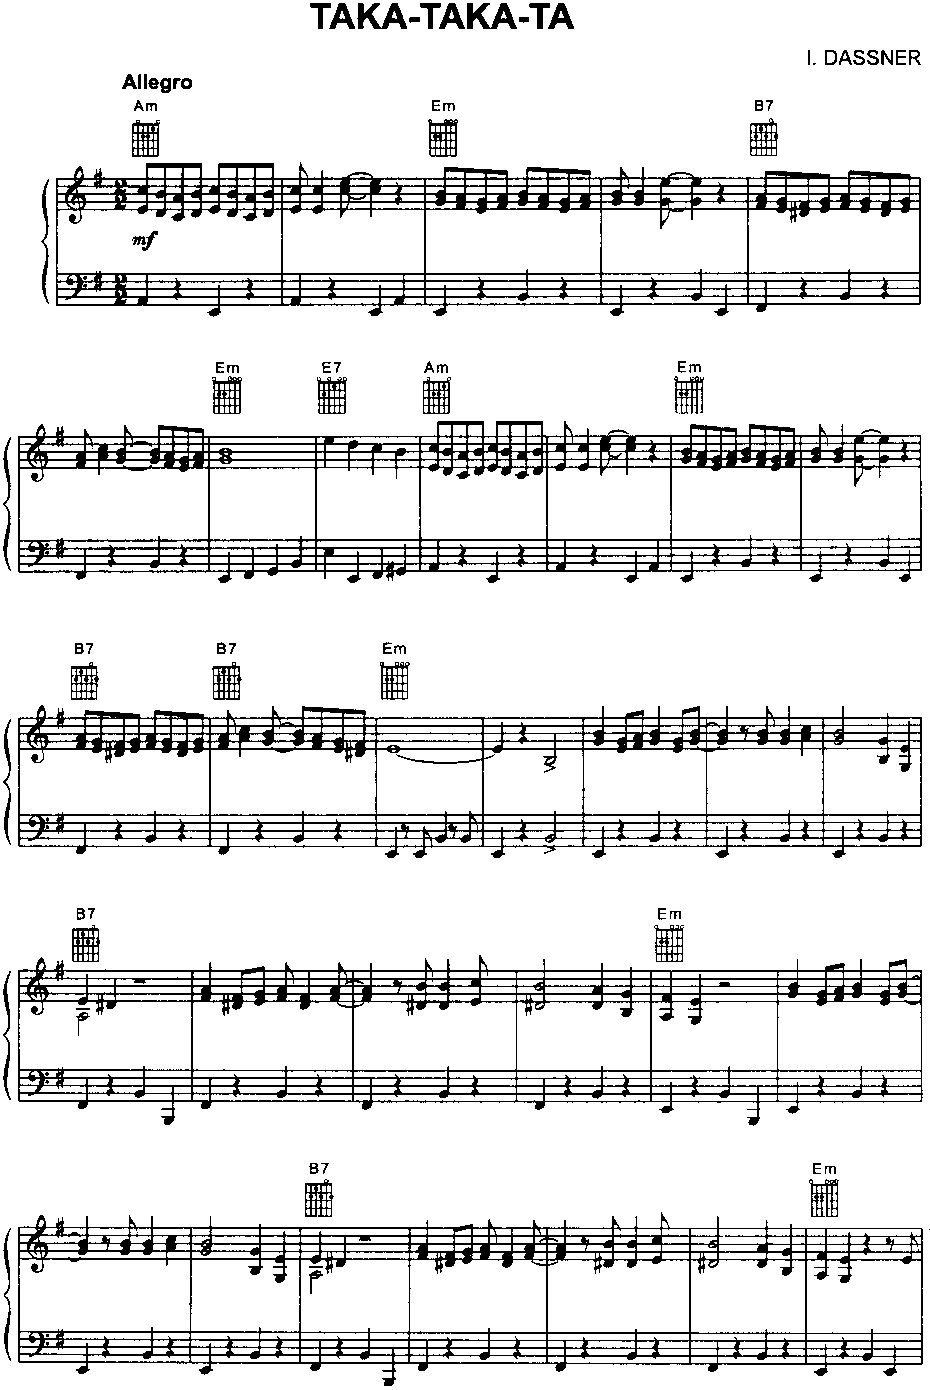 I. Dassner - Taka-taka-ta (ноты для фортепиано) .